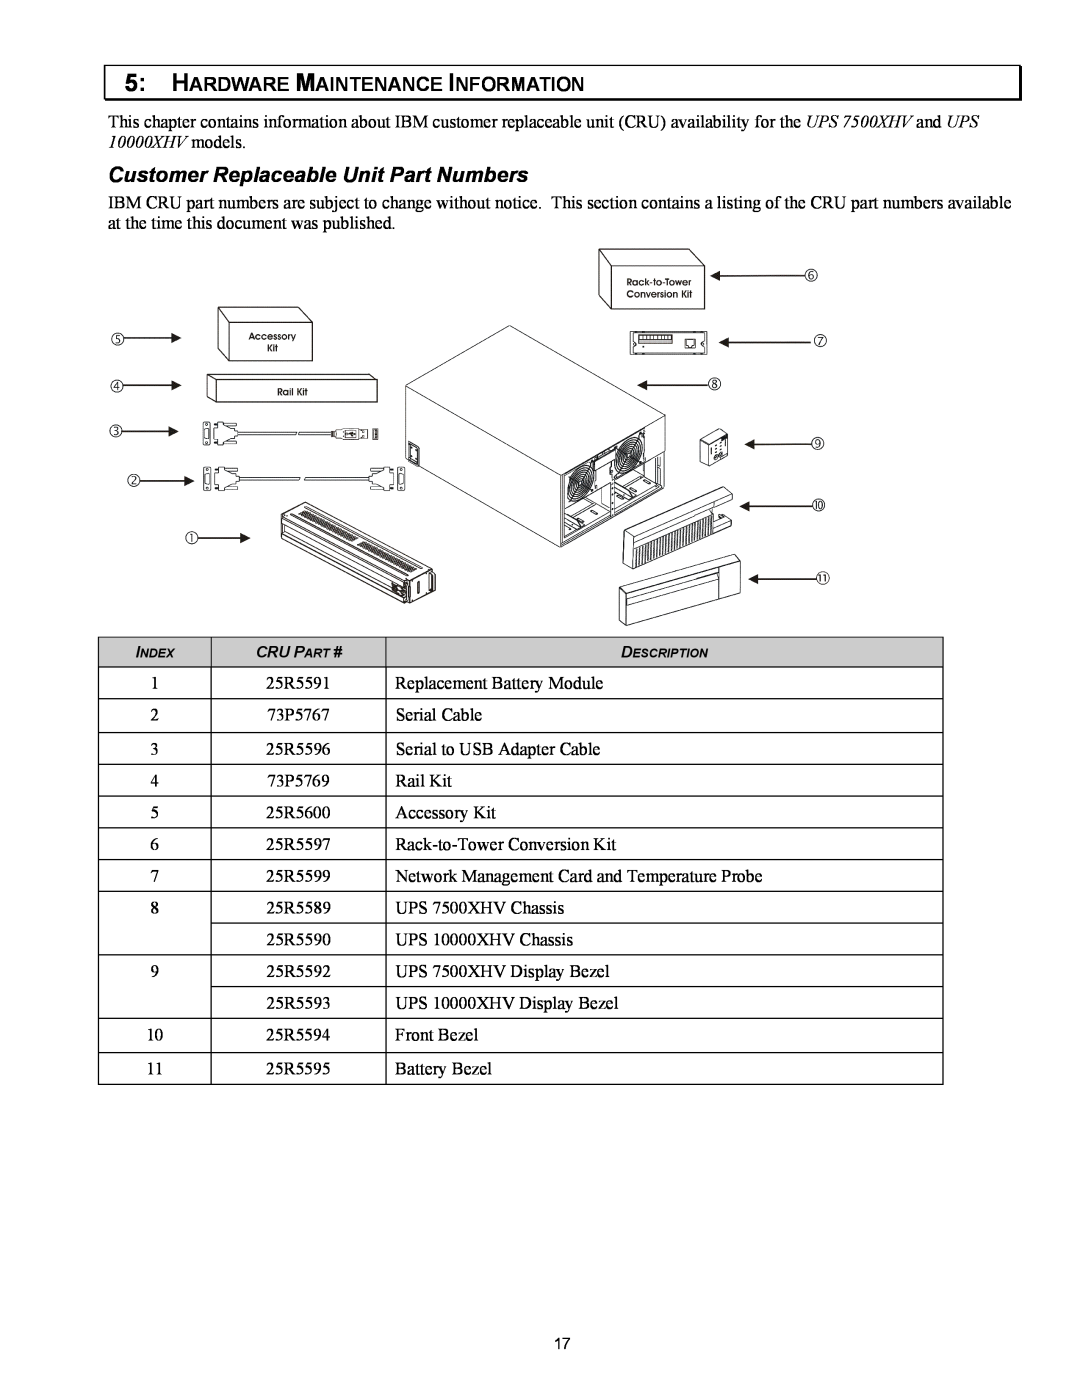 IBM IBM UPS 7500XHV, IBM UPS 10000XHV setup guide Customer Replaceable Unit Part Numbers, Hardware Maintenance Information 